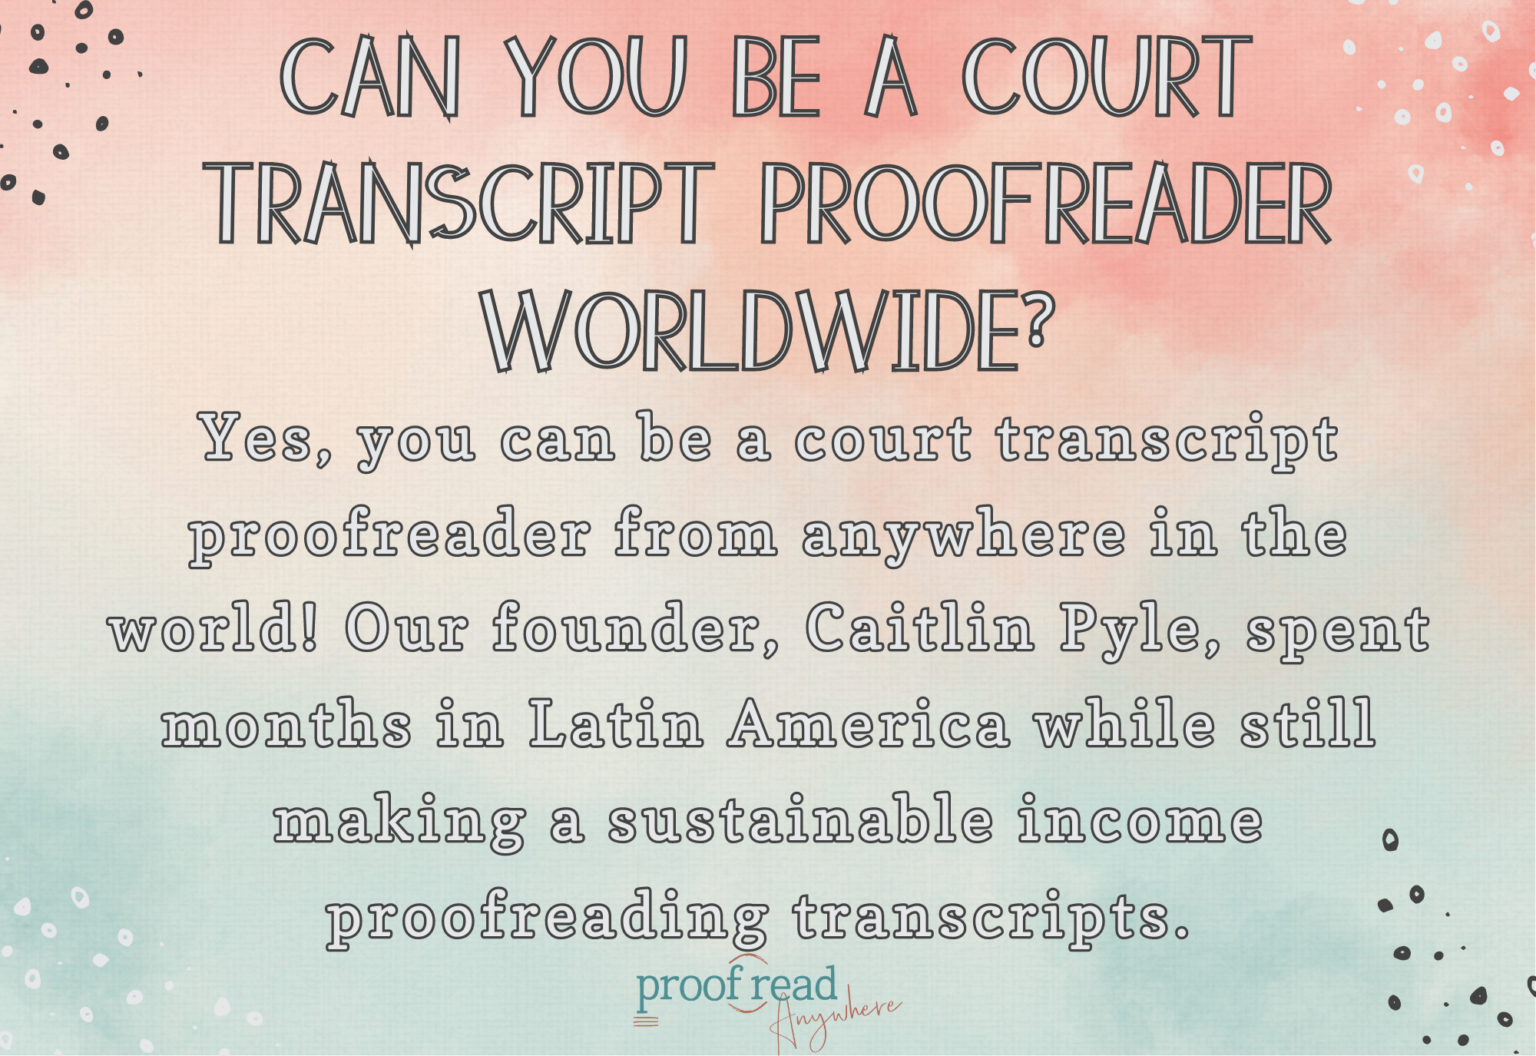 How Do I Become a Court Transcript Proofreader?